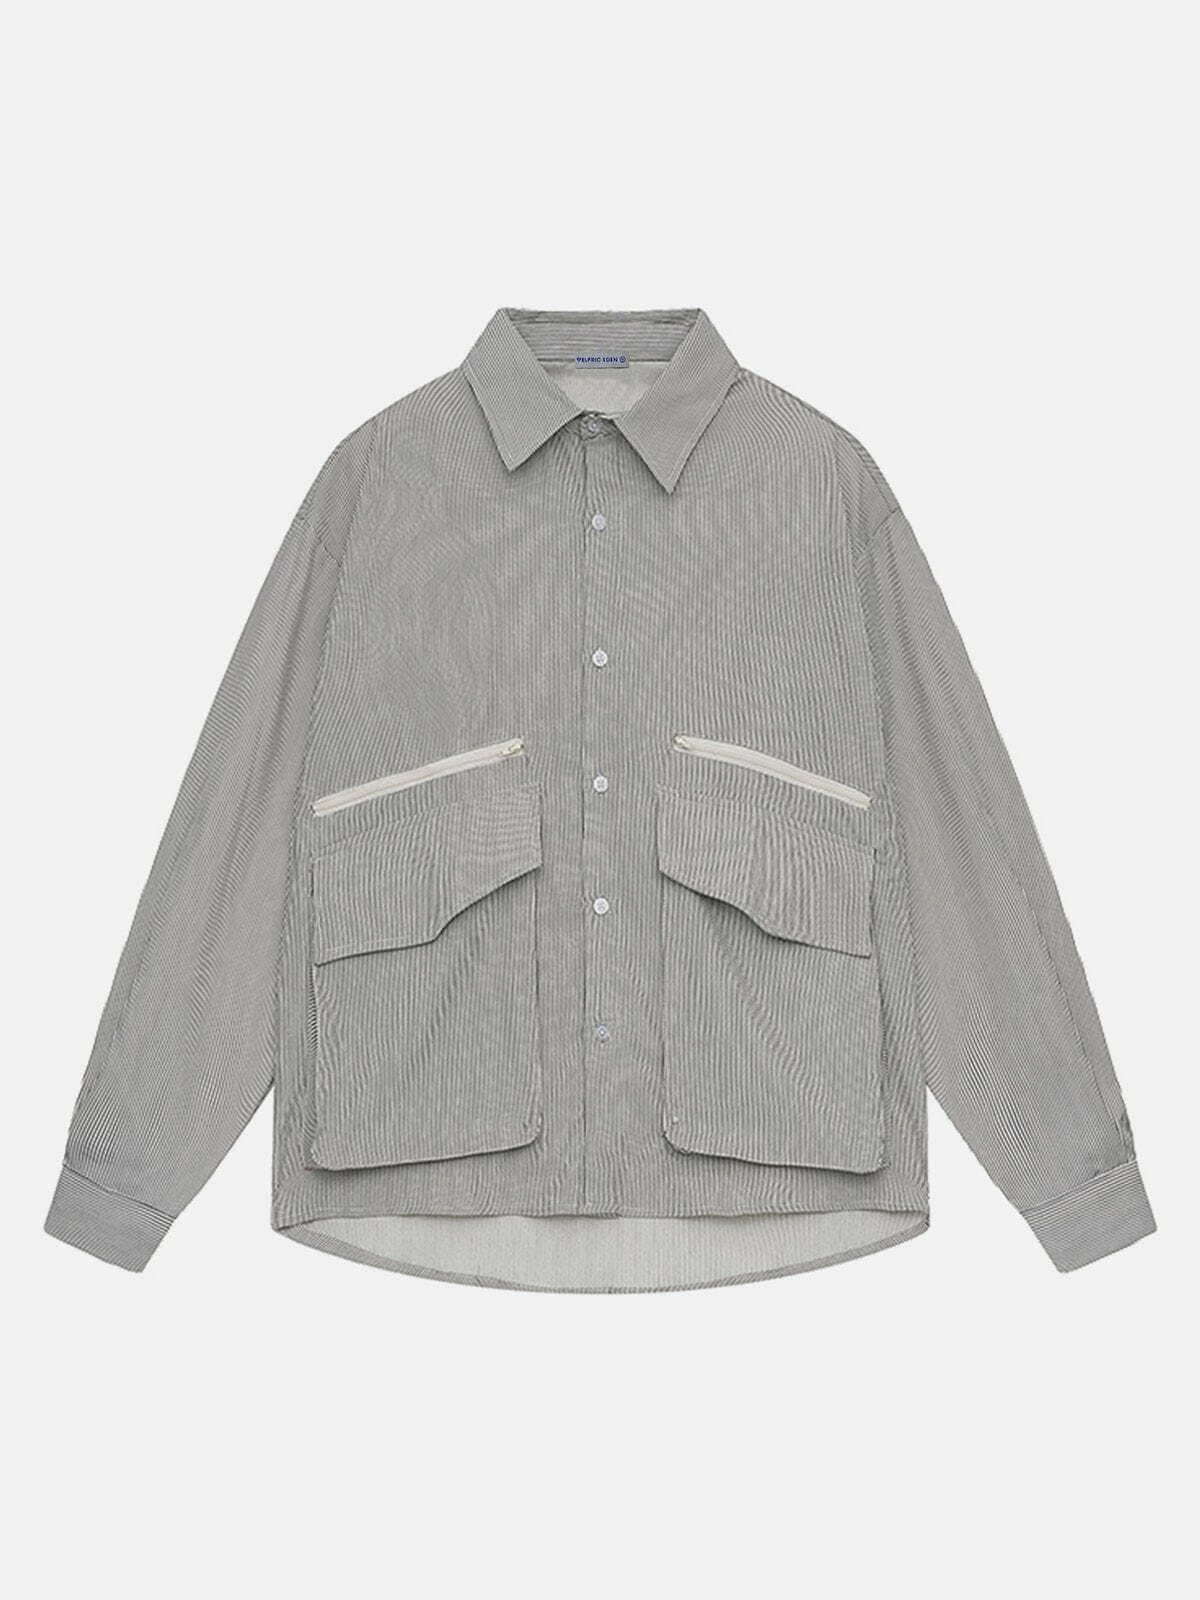 personalized pocket shirt   edgy & trendy streetwear 1198